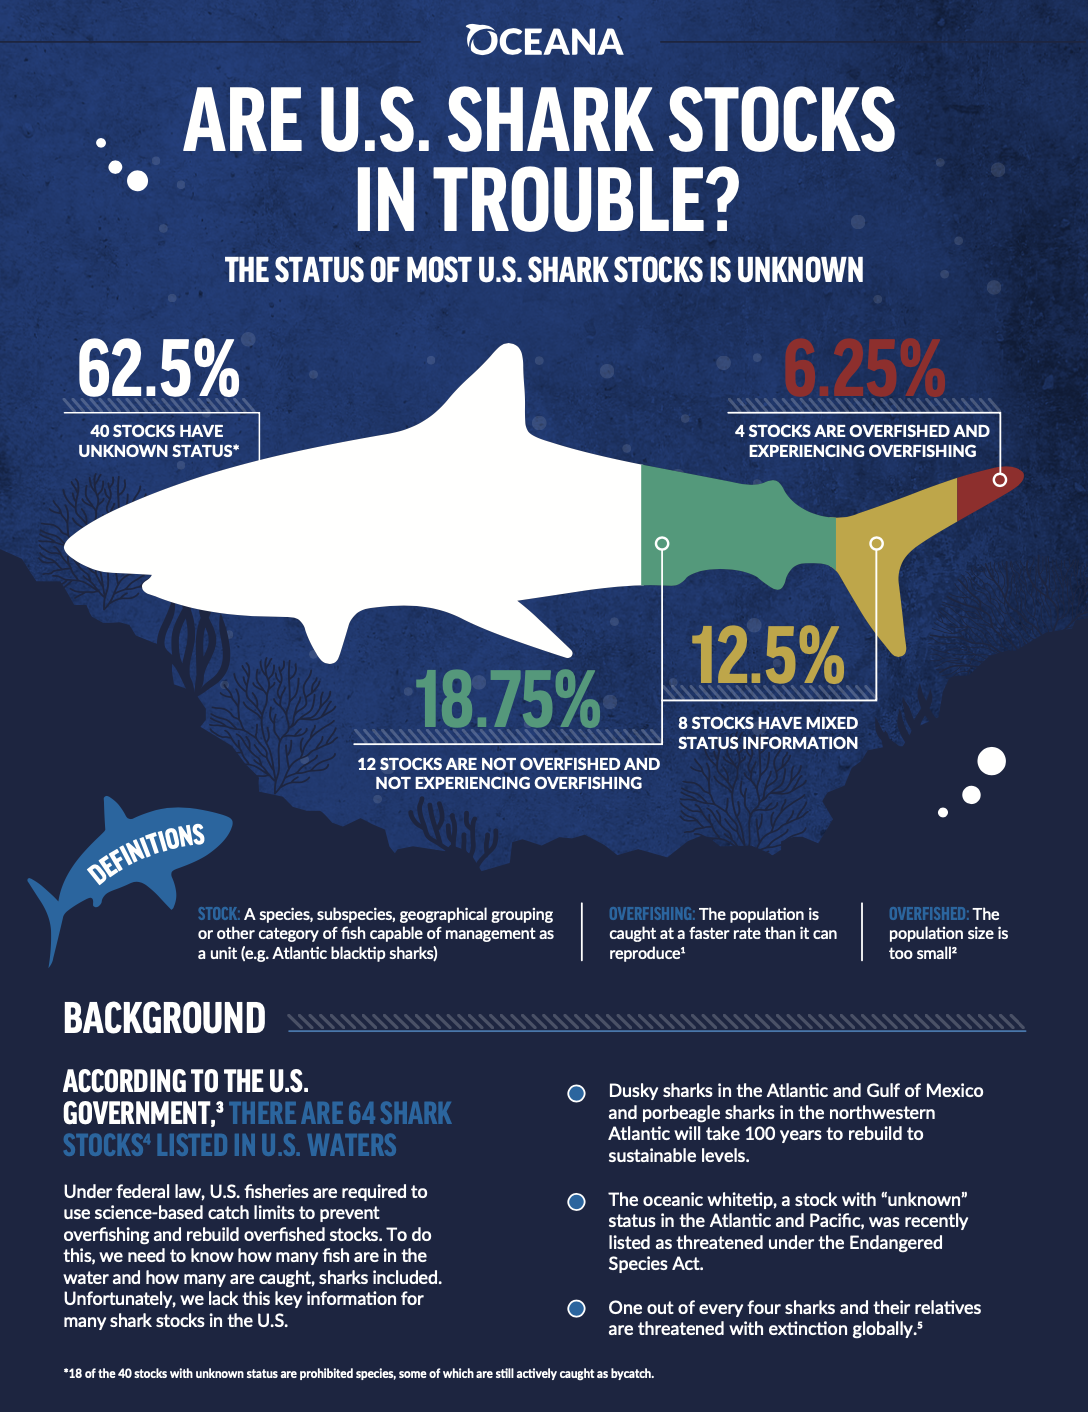 Sharks Make a Big Impact for Florida's Economy